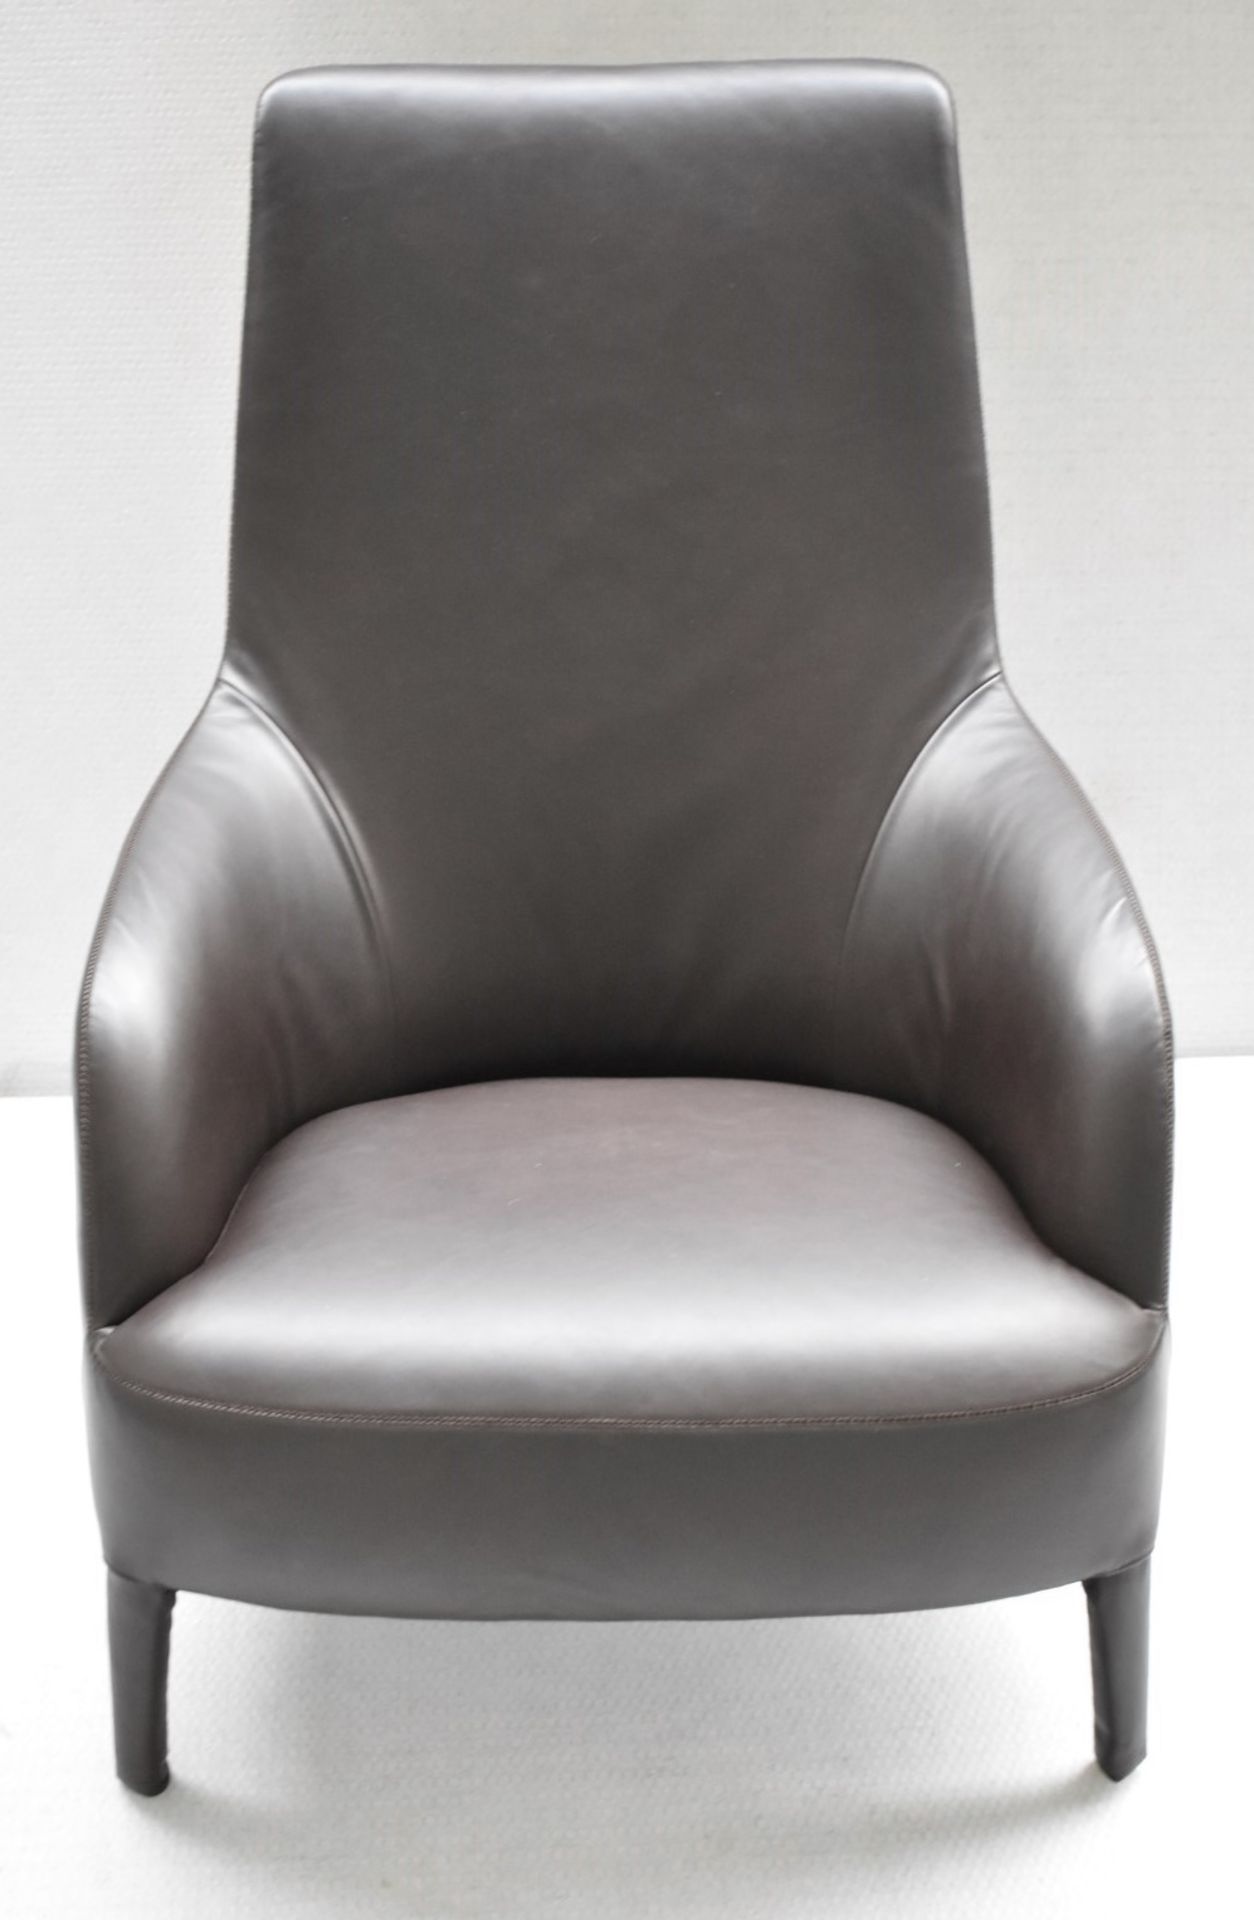 1 x B&B ITALIA / MAXALTO 'Febo Bergère' Leather Armchair - RRP £5,800 - Image 6 of 7